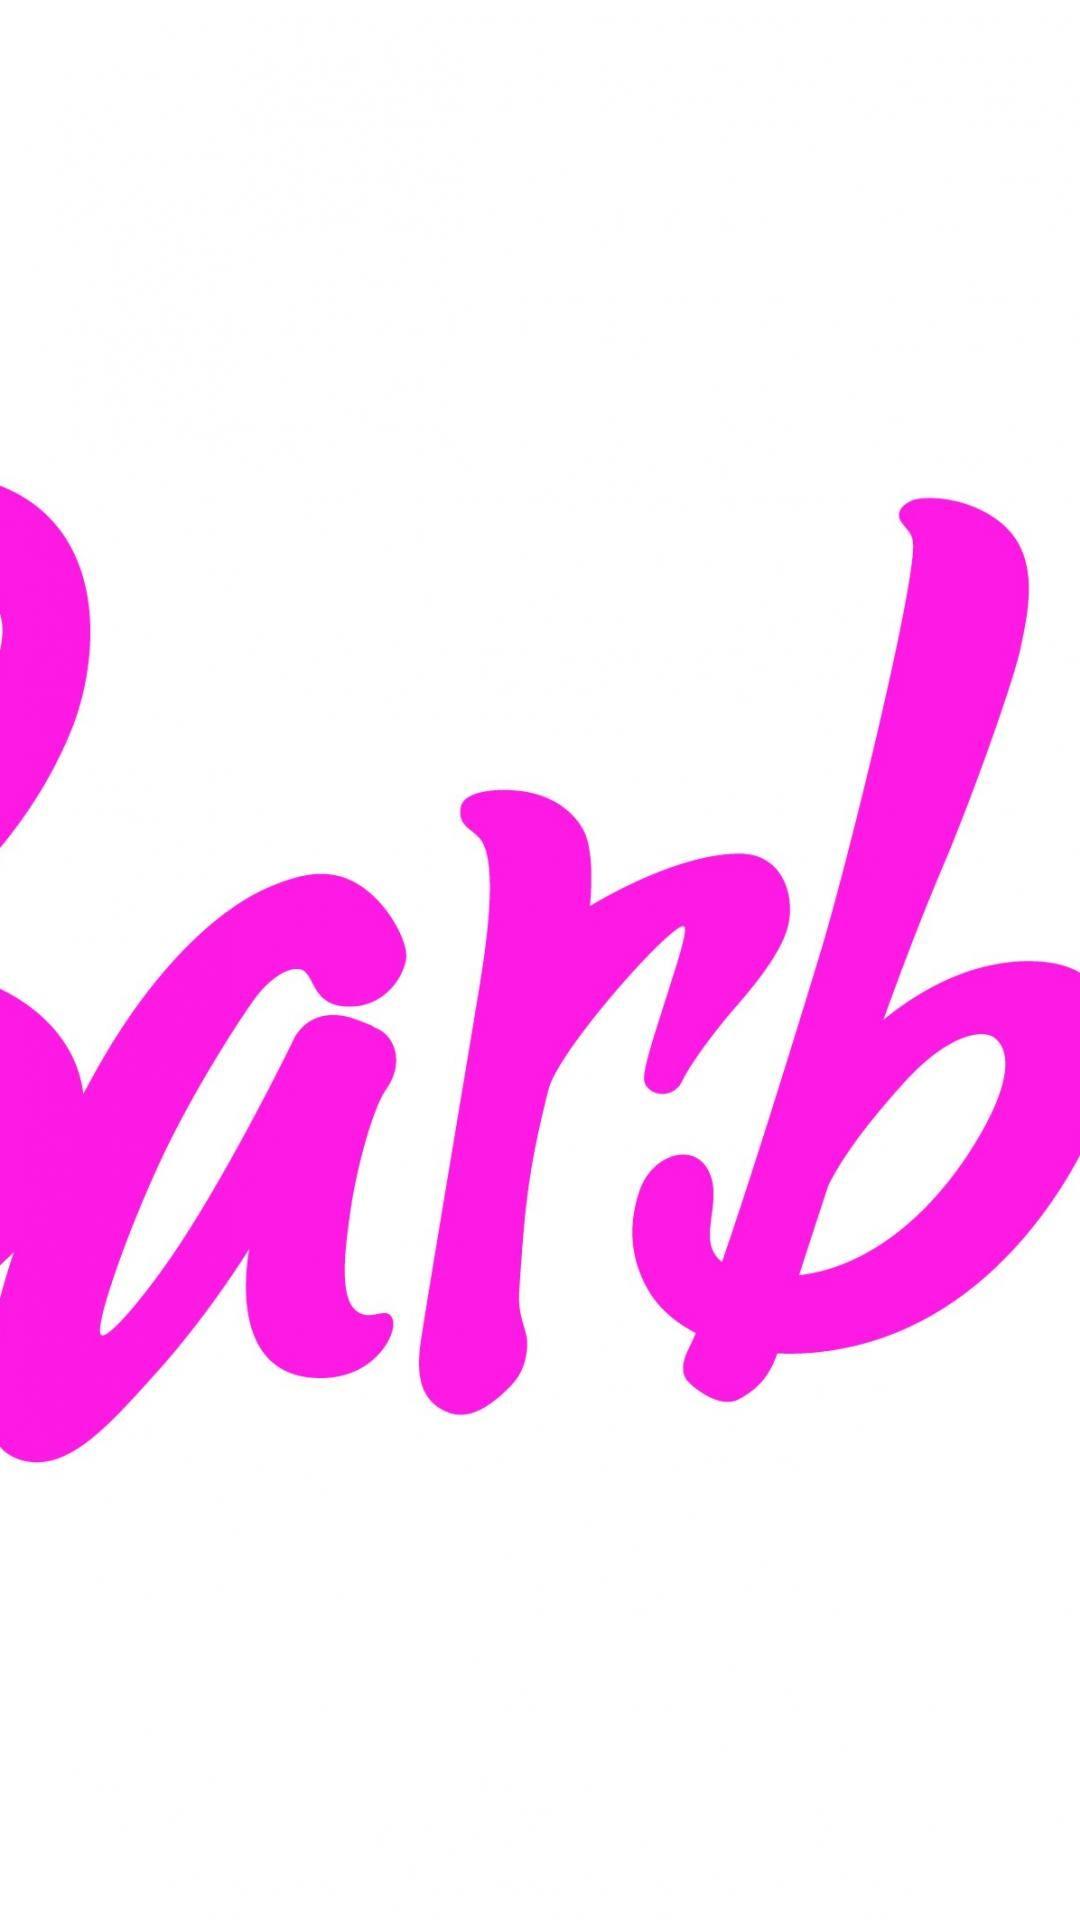 Barbie logo wallpaper